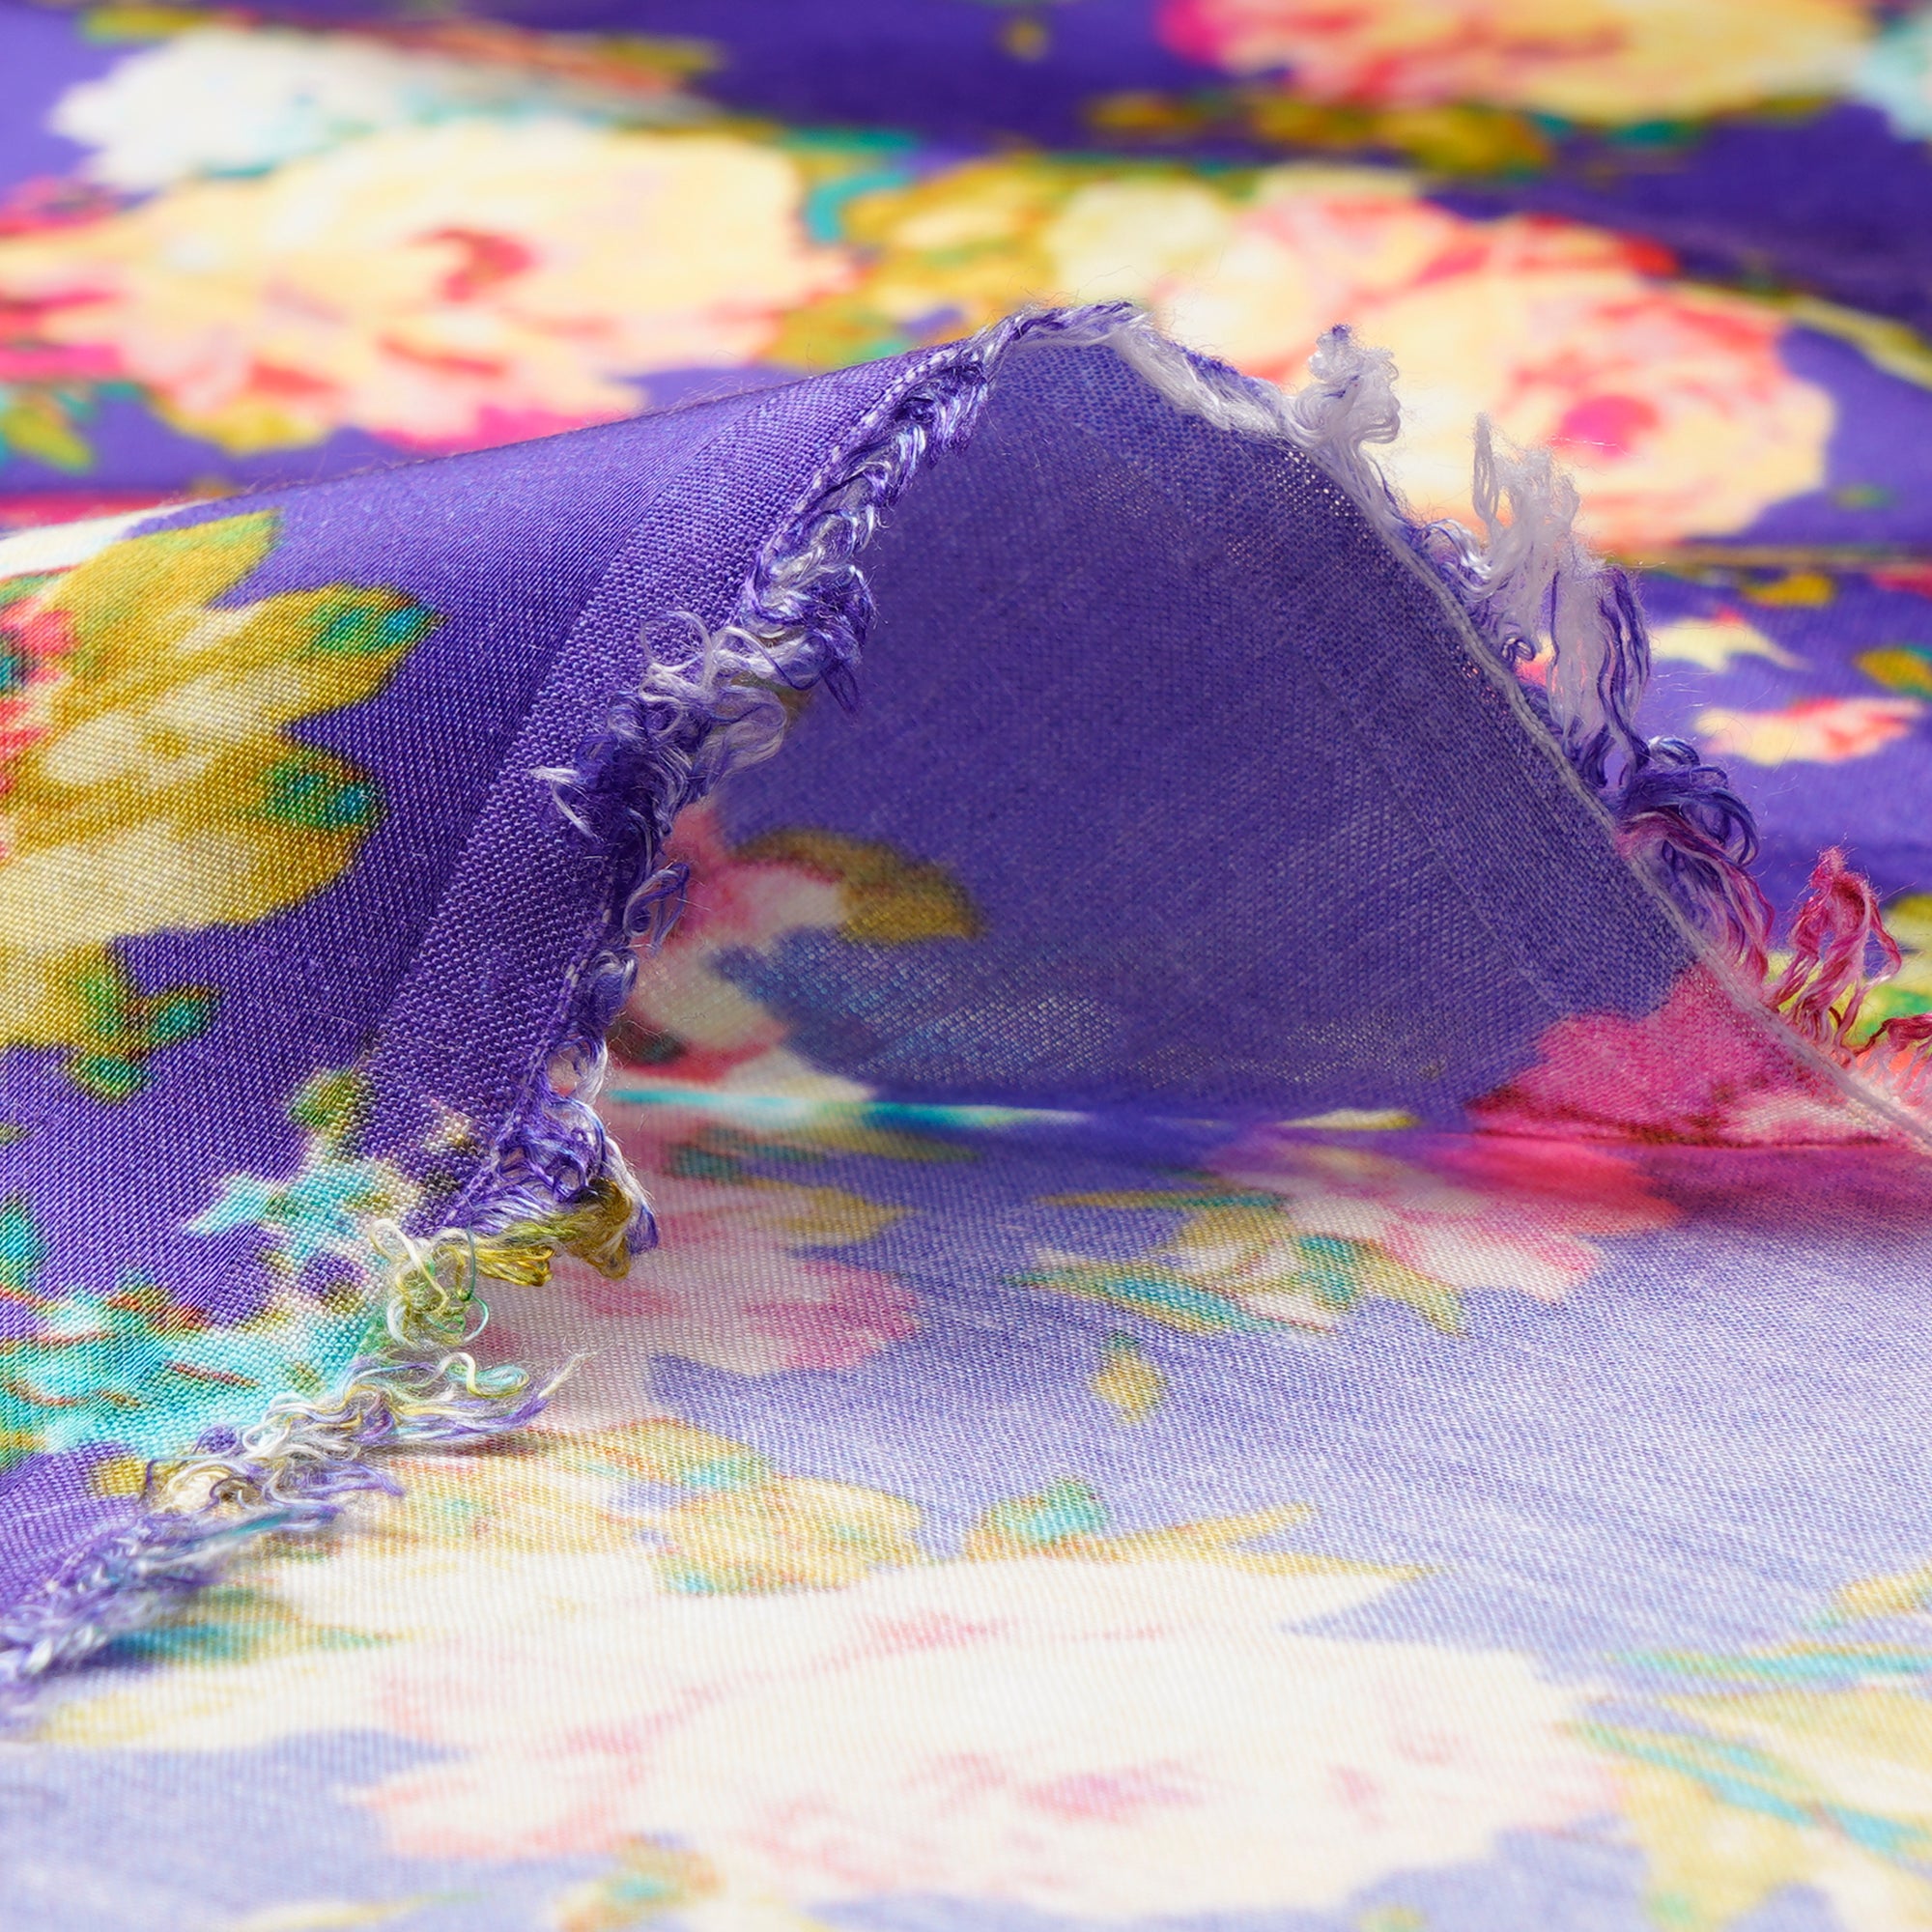 Violet Color Digital Printed Modal Satin Fabric